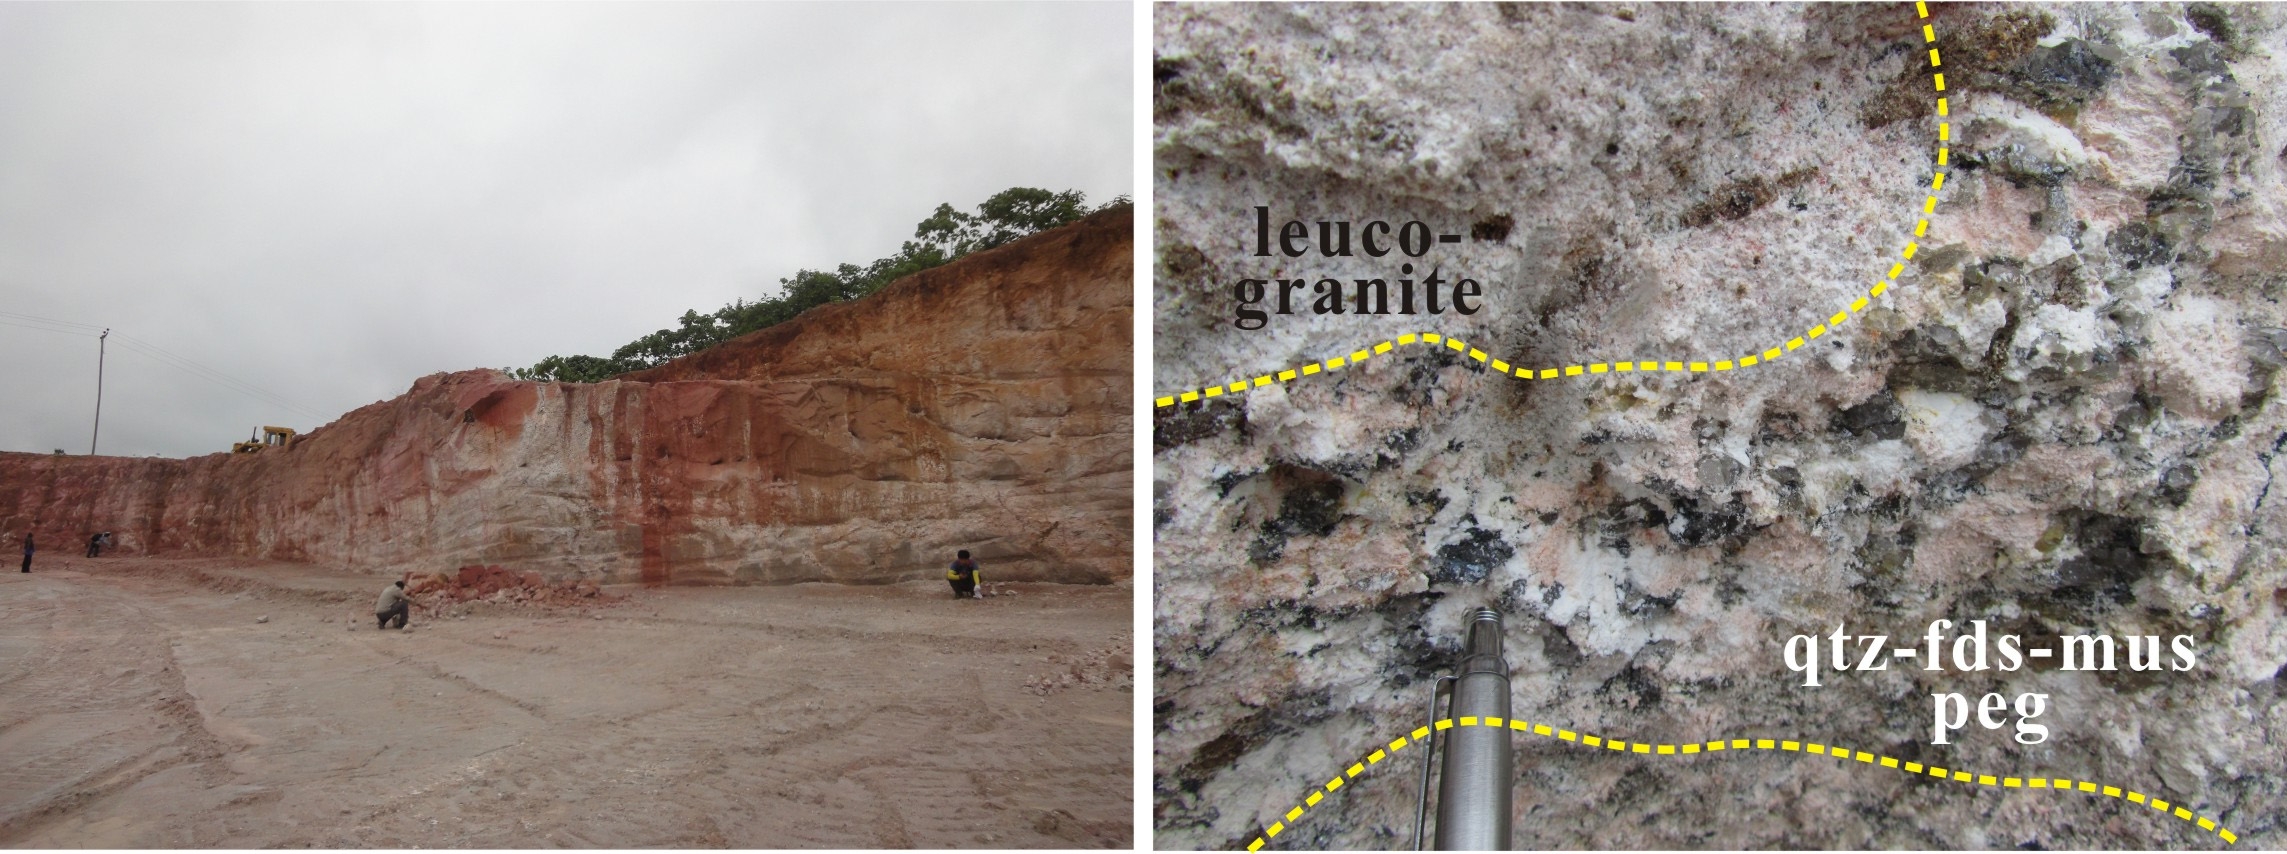 Fig. 1-24. Mining operation at Bambo-waha pegmaitc granite II area. A. The Bambo-waha pegmatitic granite II is mining for kaolinite. B. The quartz-feldspar-muscovite pegmatite occurs in leuco-granite.